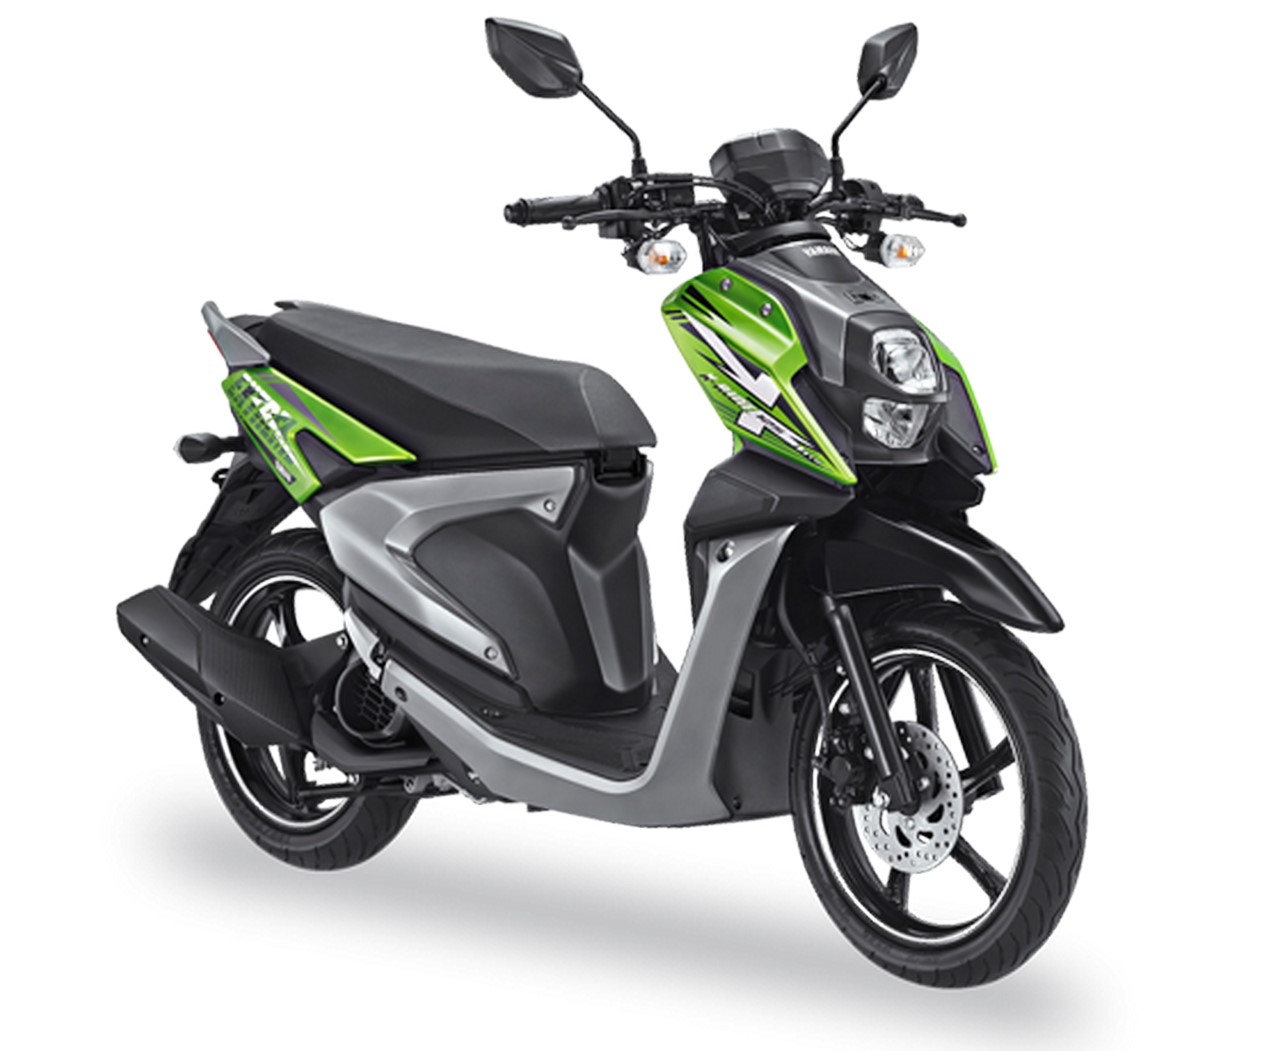  Yamaha X Ride 125 launched at Jakarta Fair 2019